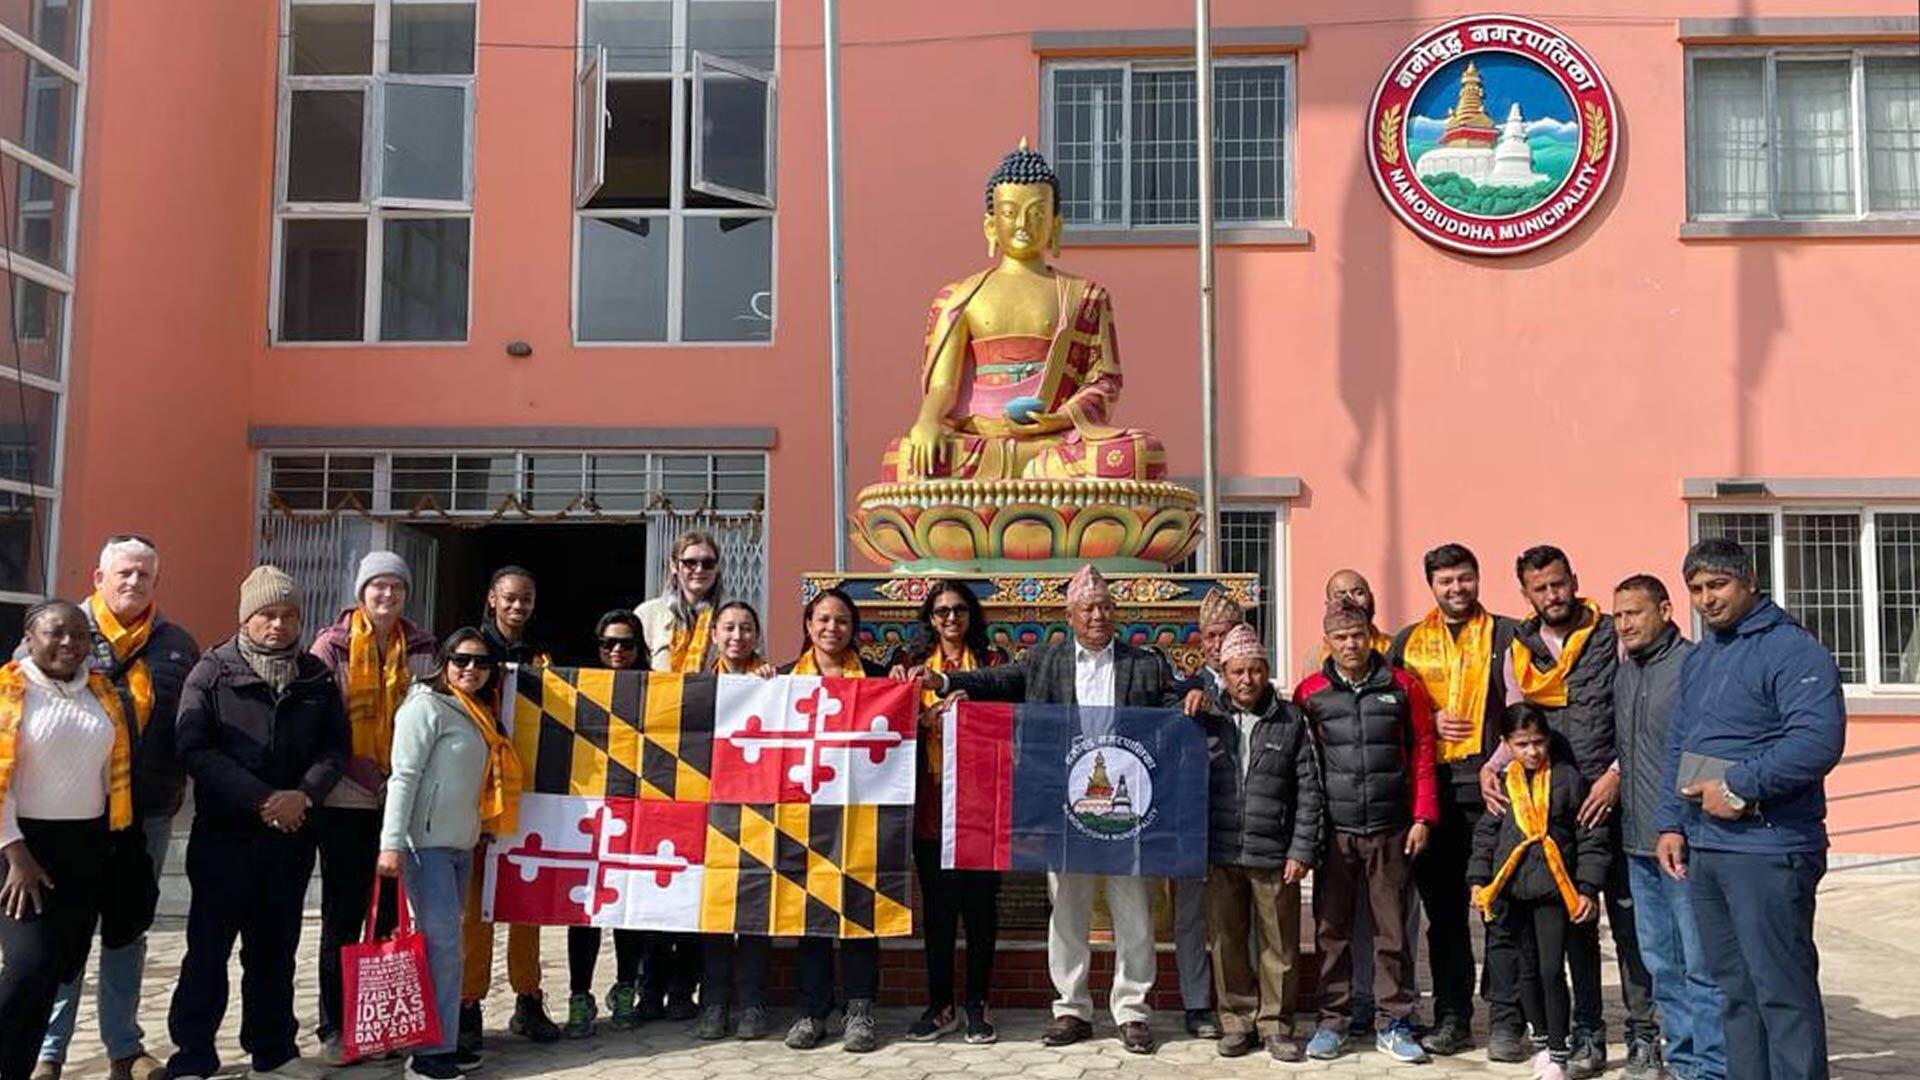 group holding Maryland flag poses with Namobuddha Mayor Kunsang Lama and his staff outside of the Municipality office